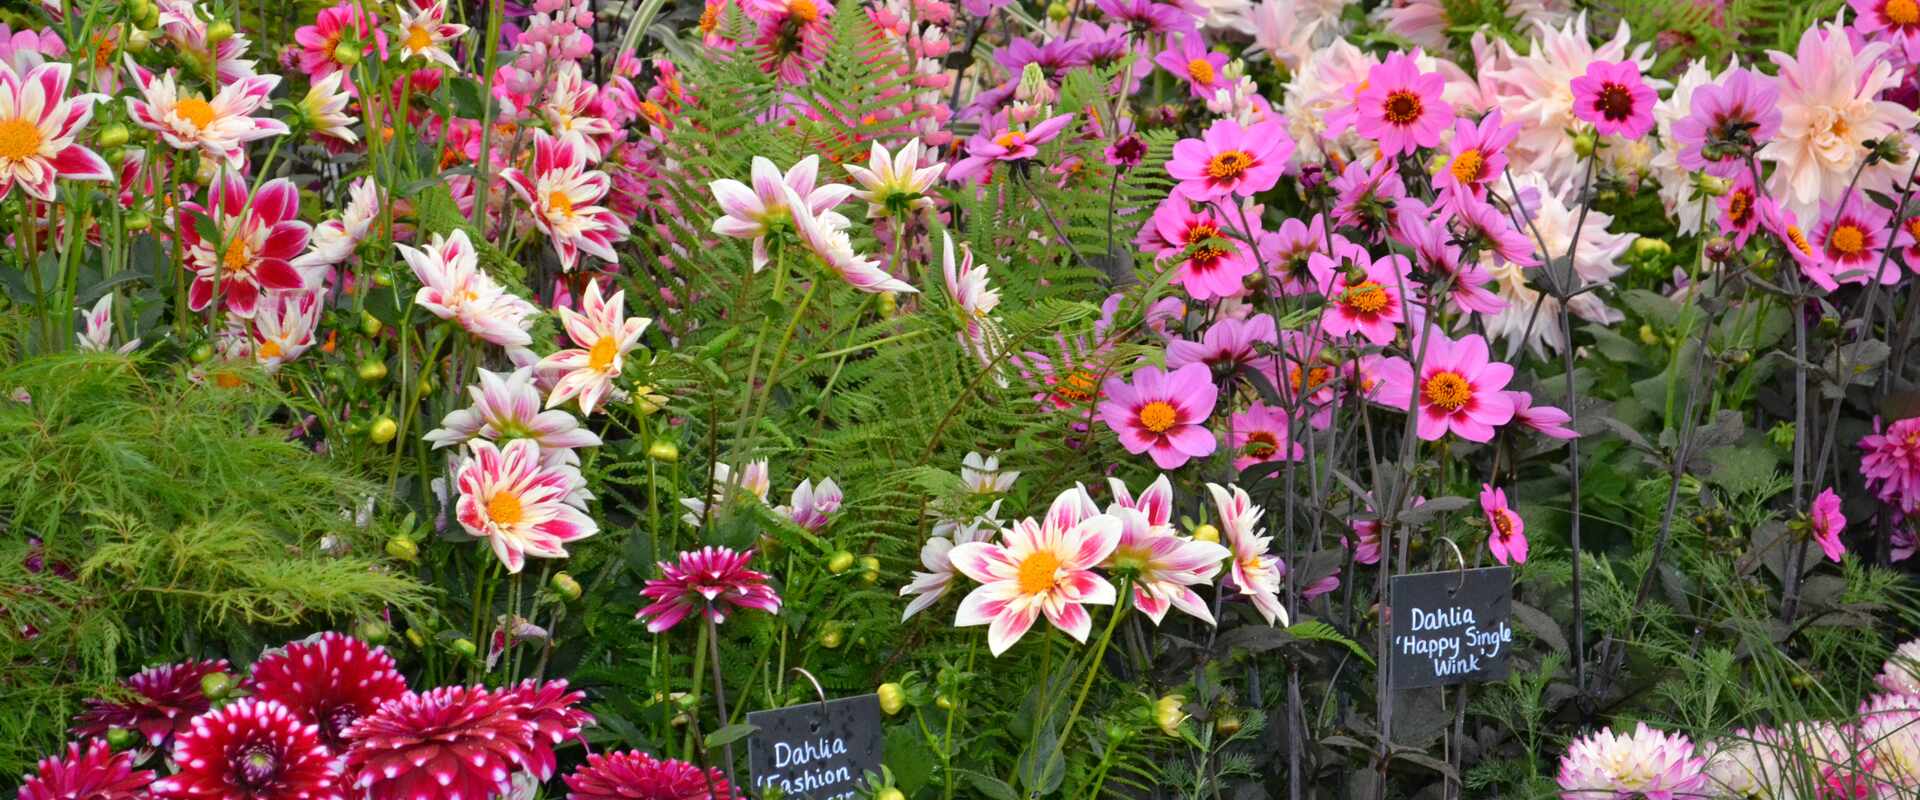 Image of Chelsea flower show